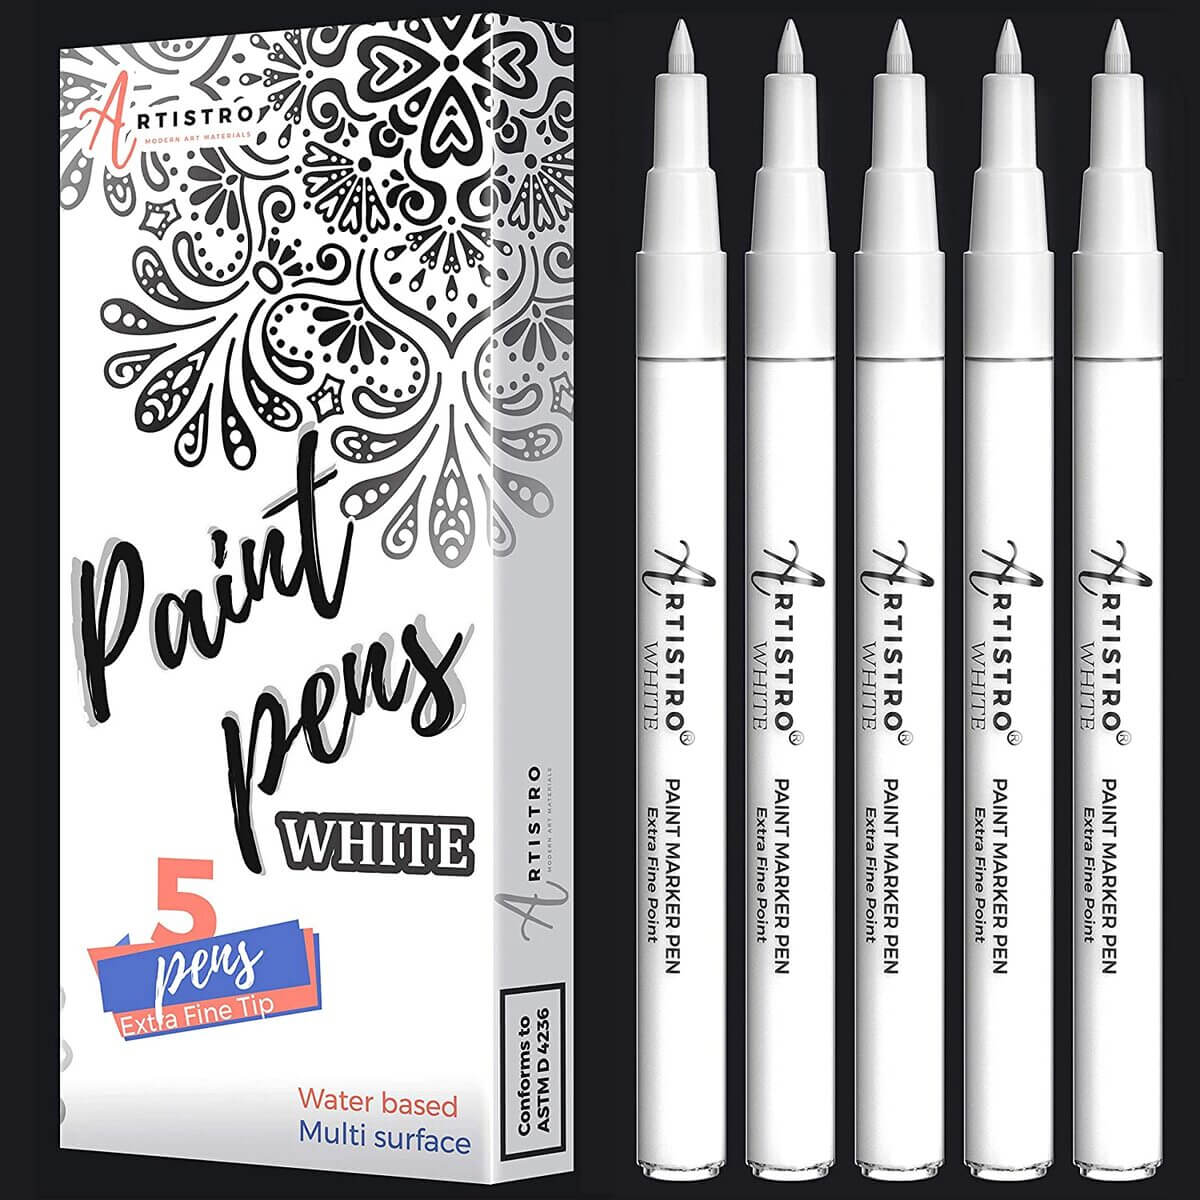 Fine Tip Oil-Based Paint Pens - Set of 15 oil based paint markers